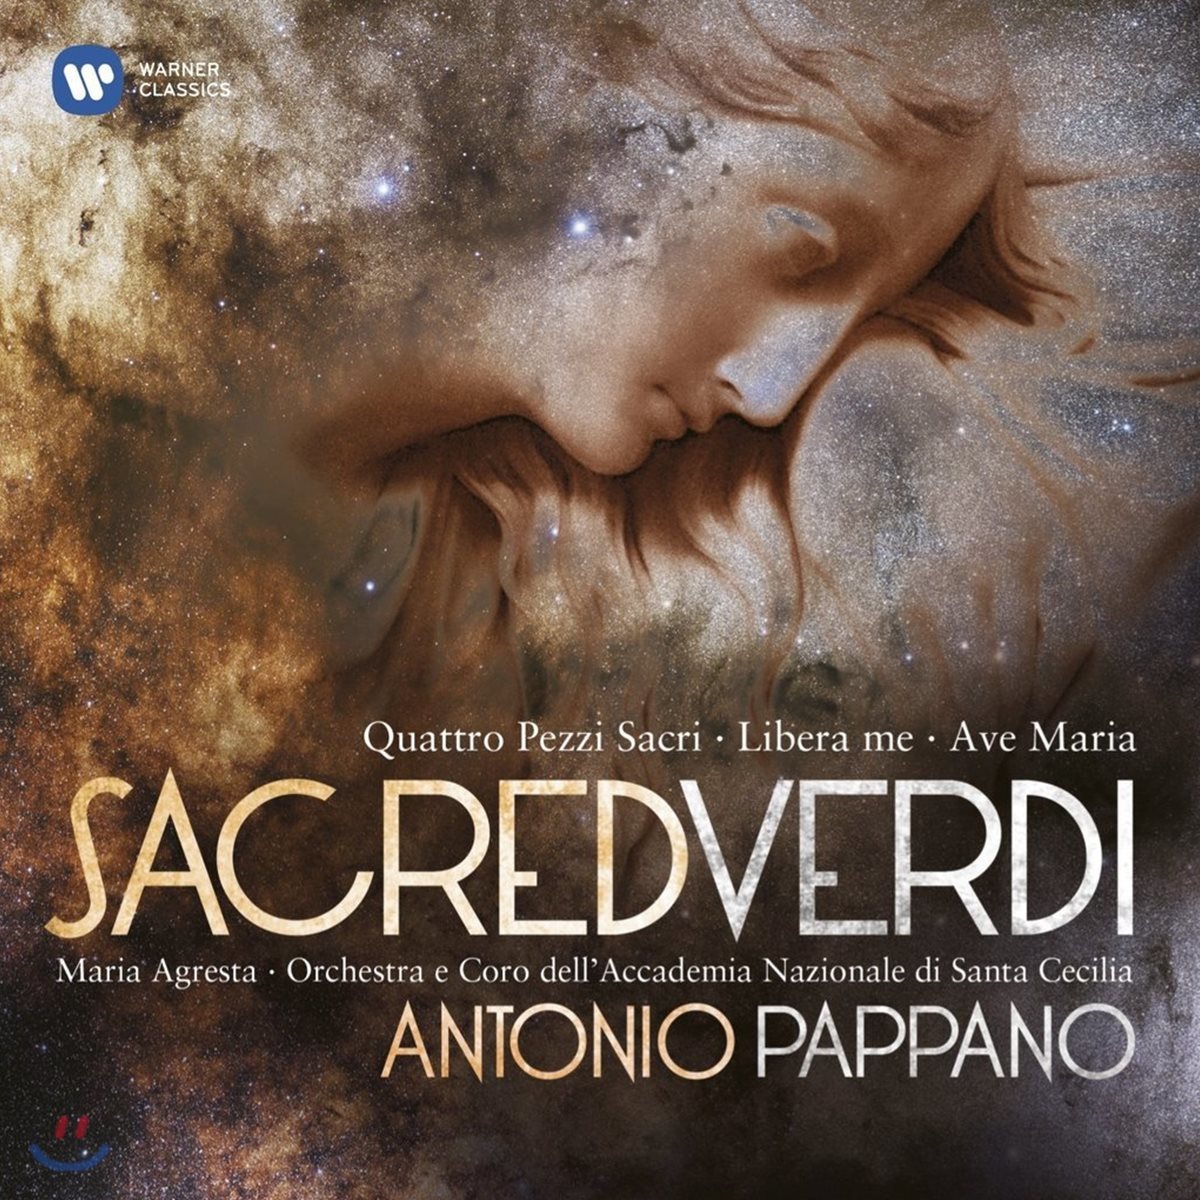 Antonio Pappano / Donika Mataj 베르디: 종교음악 (Sacred Verdi)